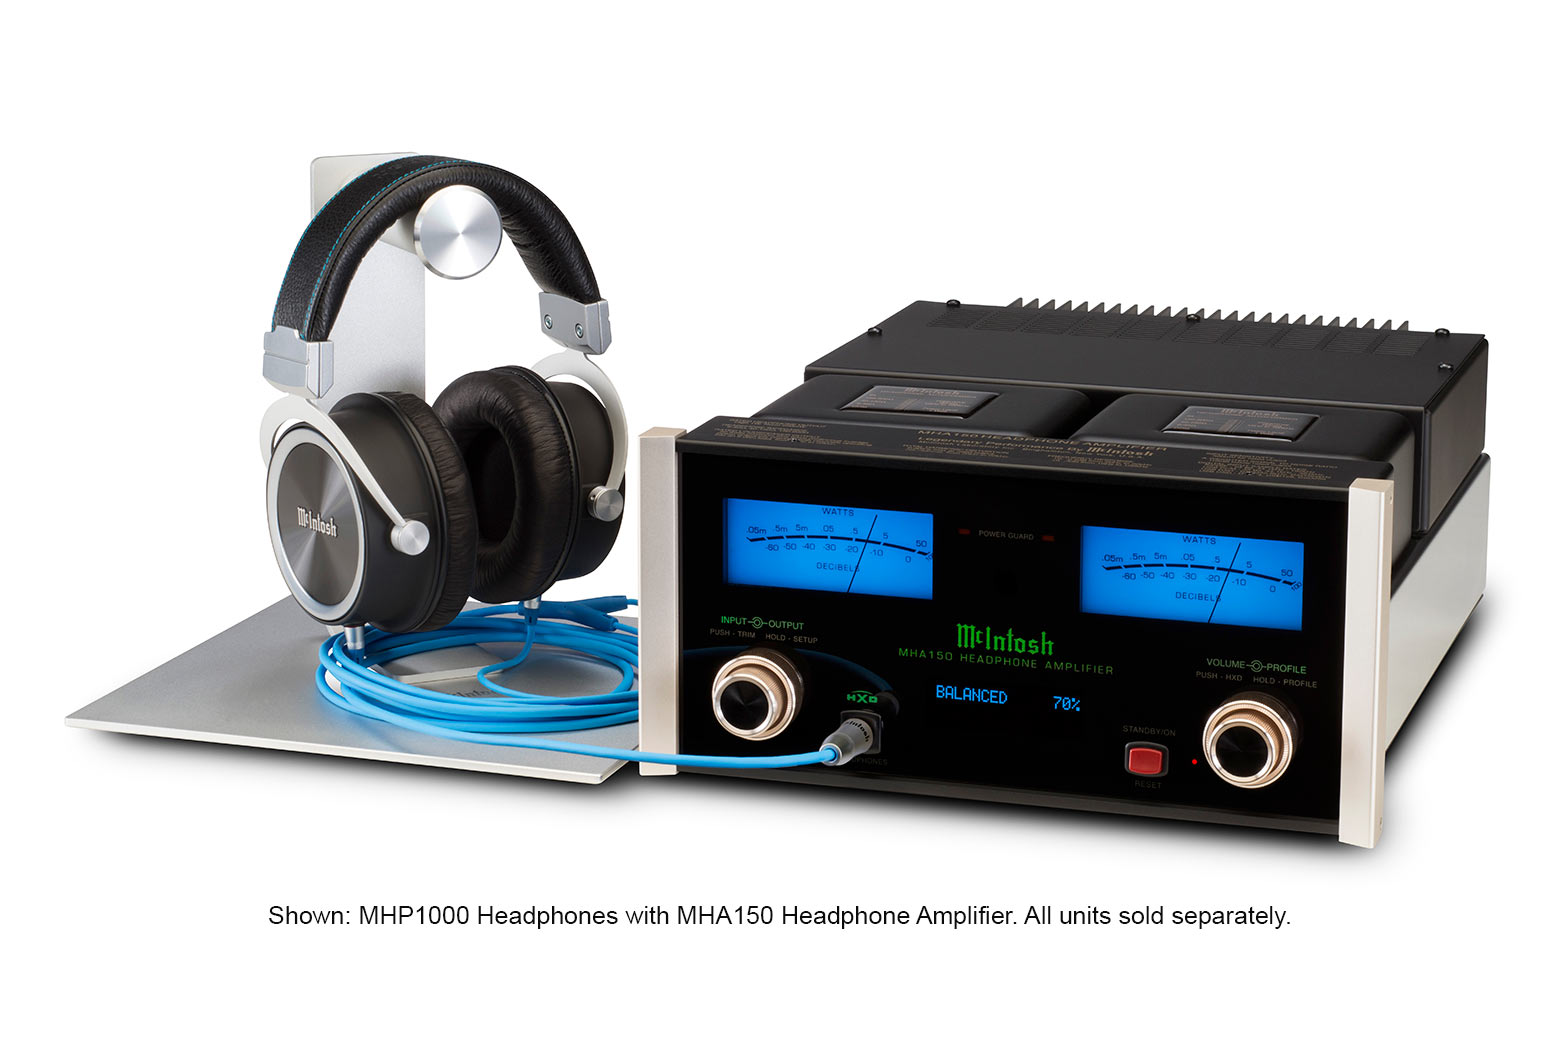 McIntosh MHA150 Headphone Amplifier